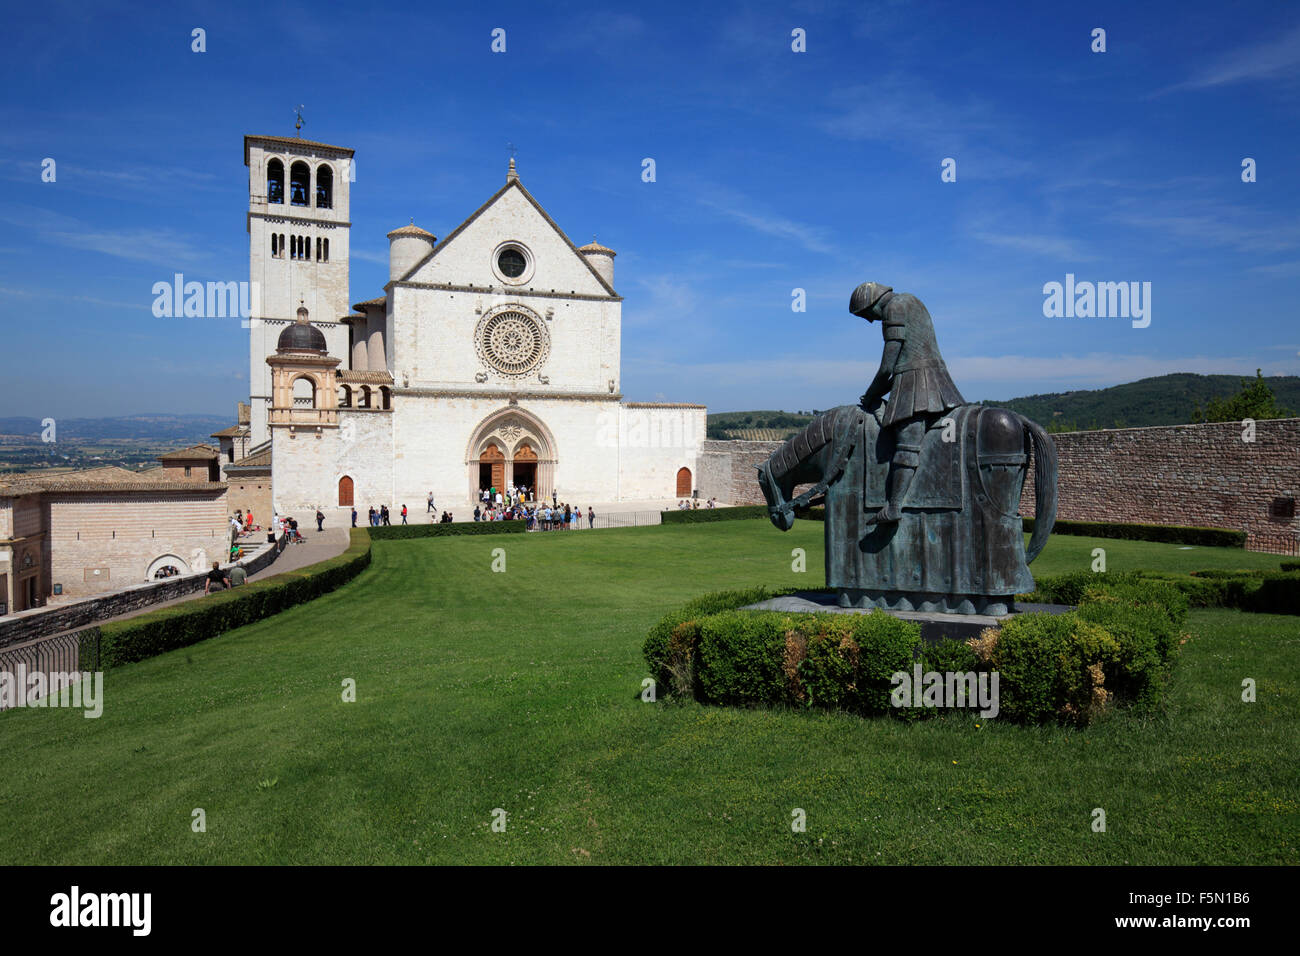 Basilique de San Francesco d'Assisi, Assisi, Italie Banque D'Images